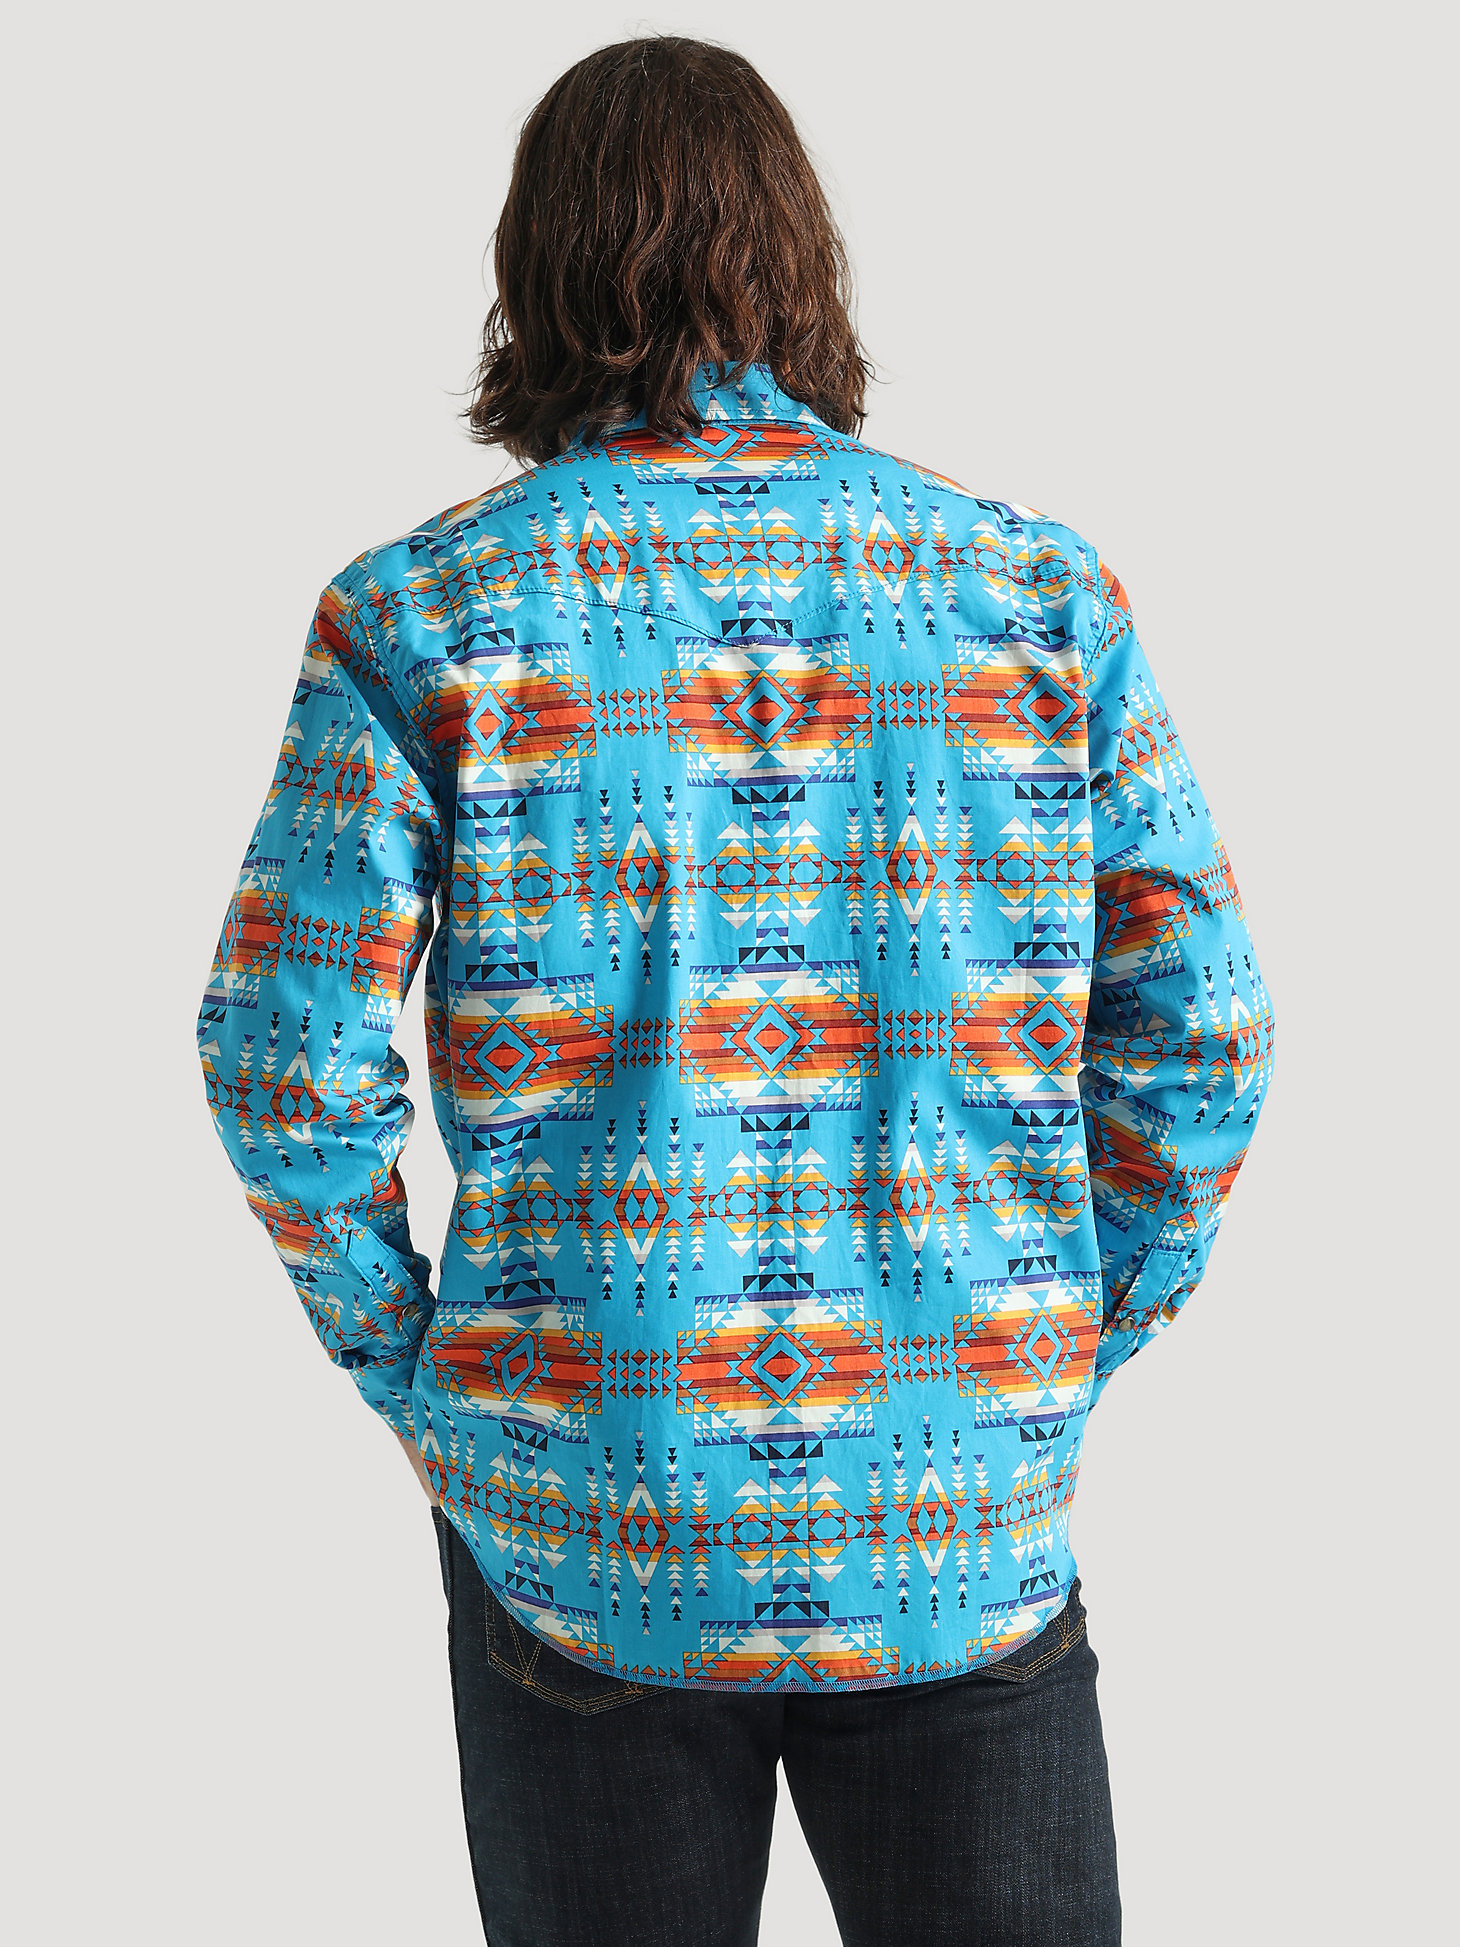 Wrangler x Pendleton Men's Plaid Inlay Work Shirt in Turquoise Print alternative view 1